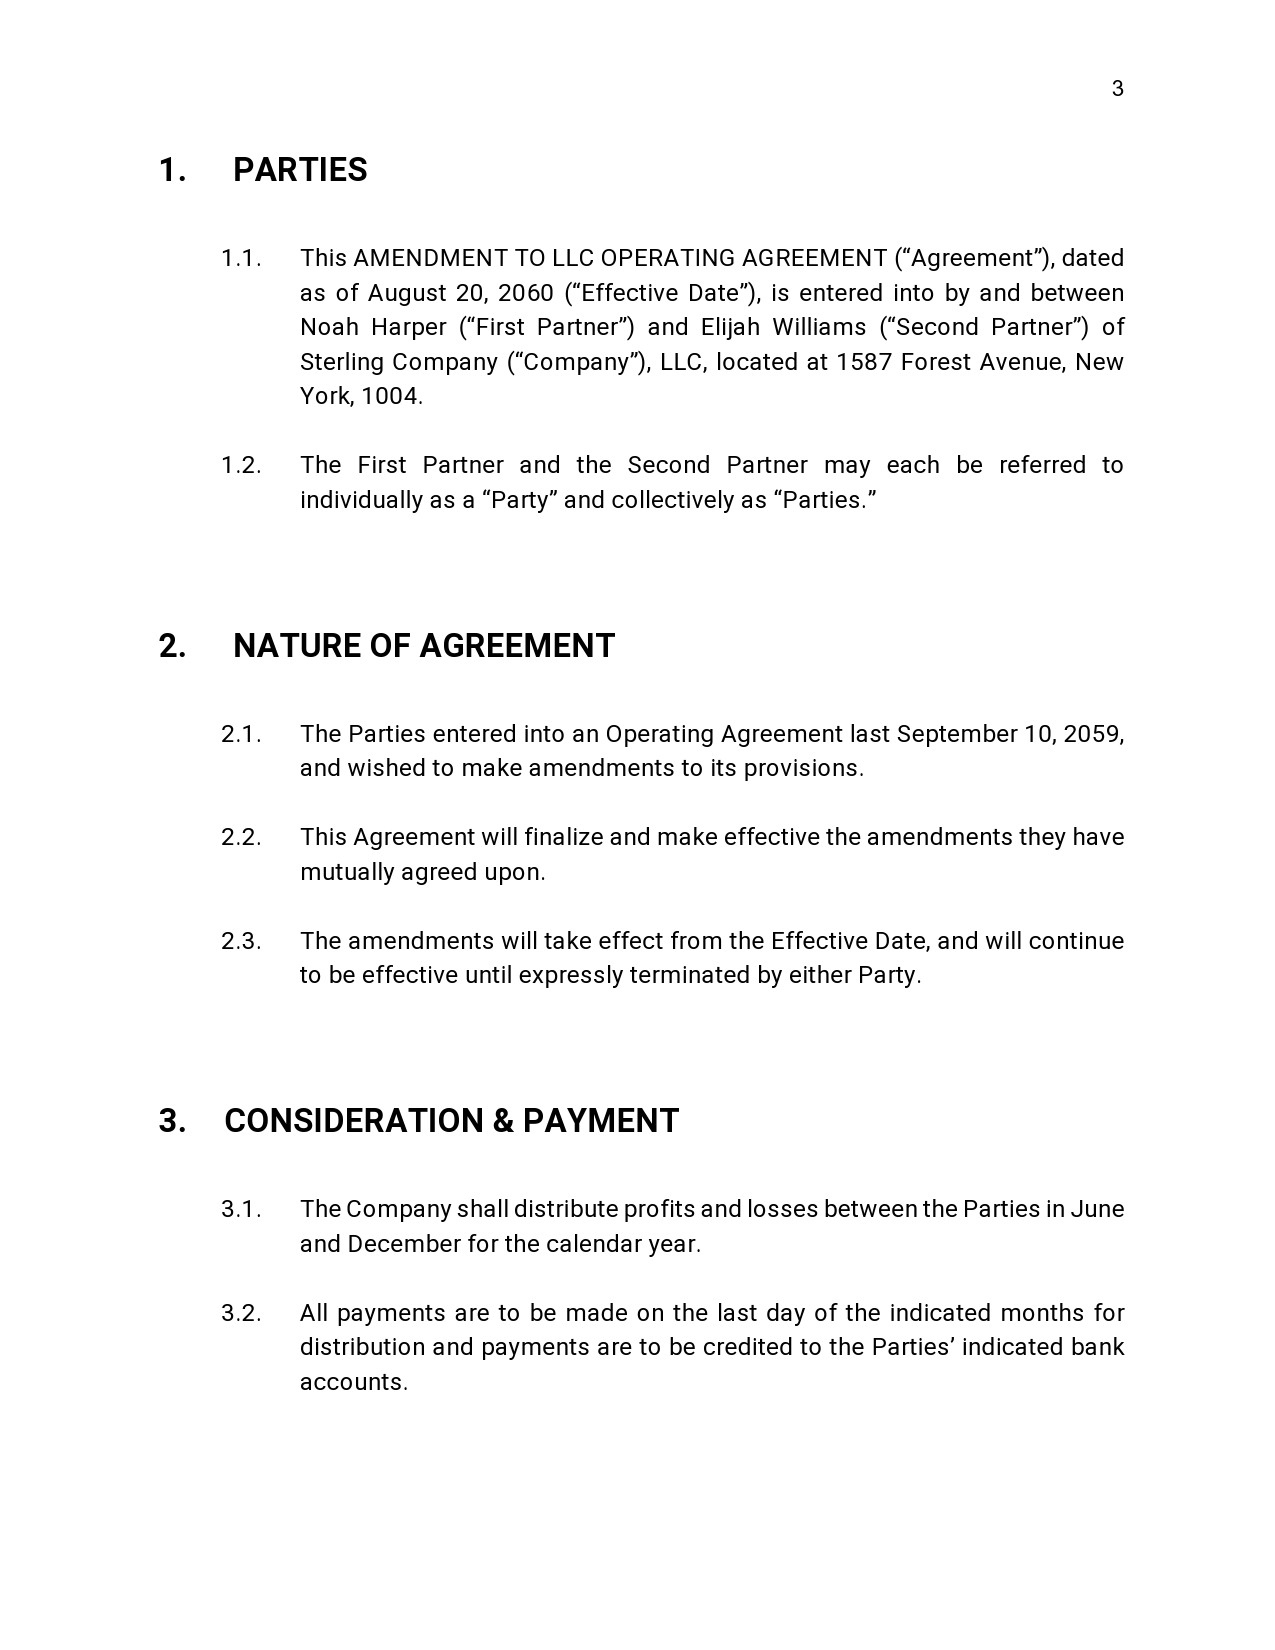 Free operating agreement amendment 06